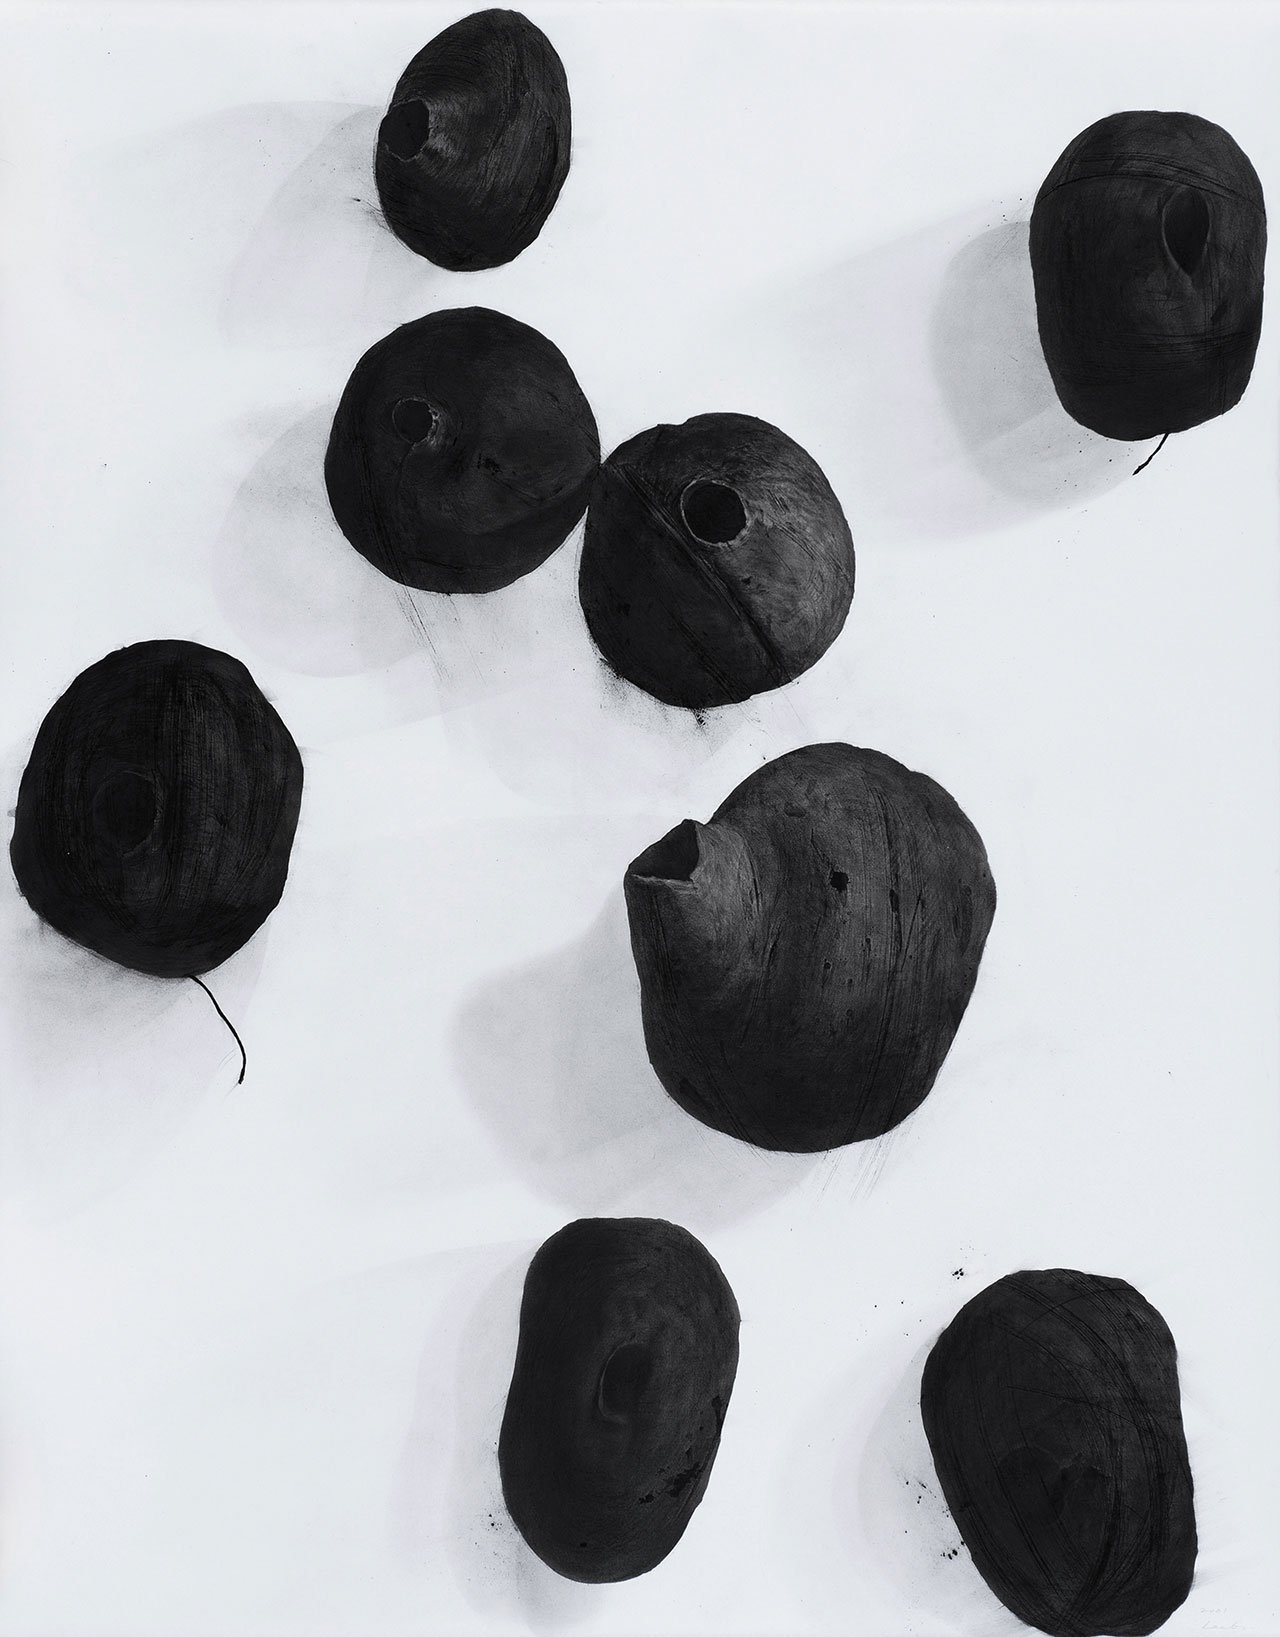 Dessin，1997 年。纸本木炭，145 x 114 厘米。 ©李裴。